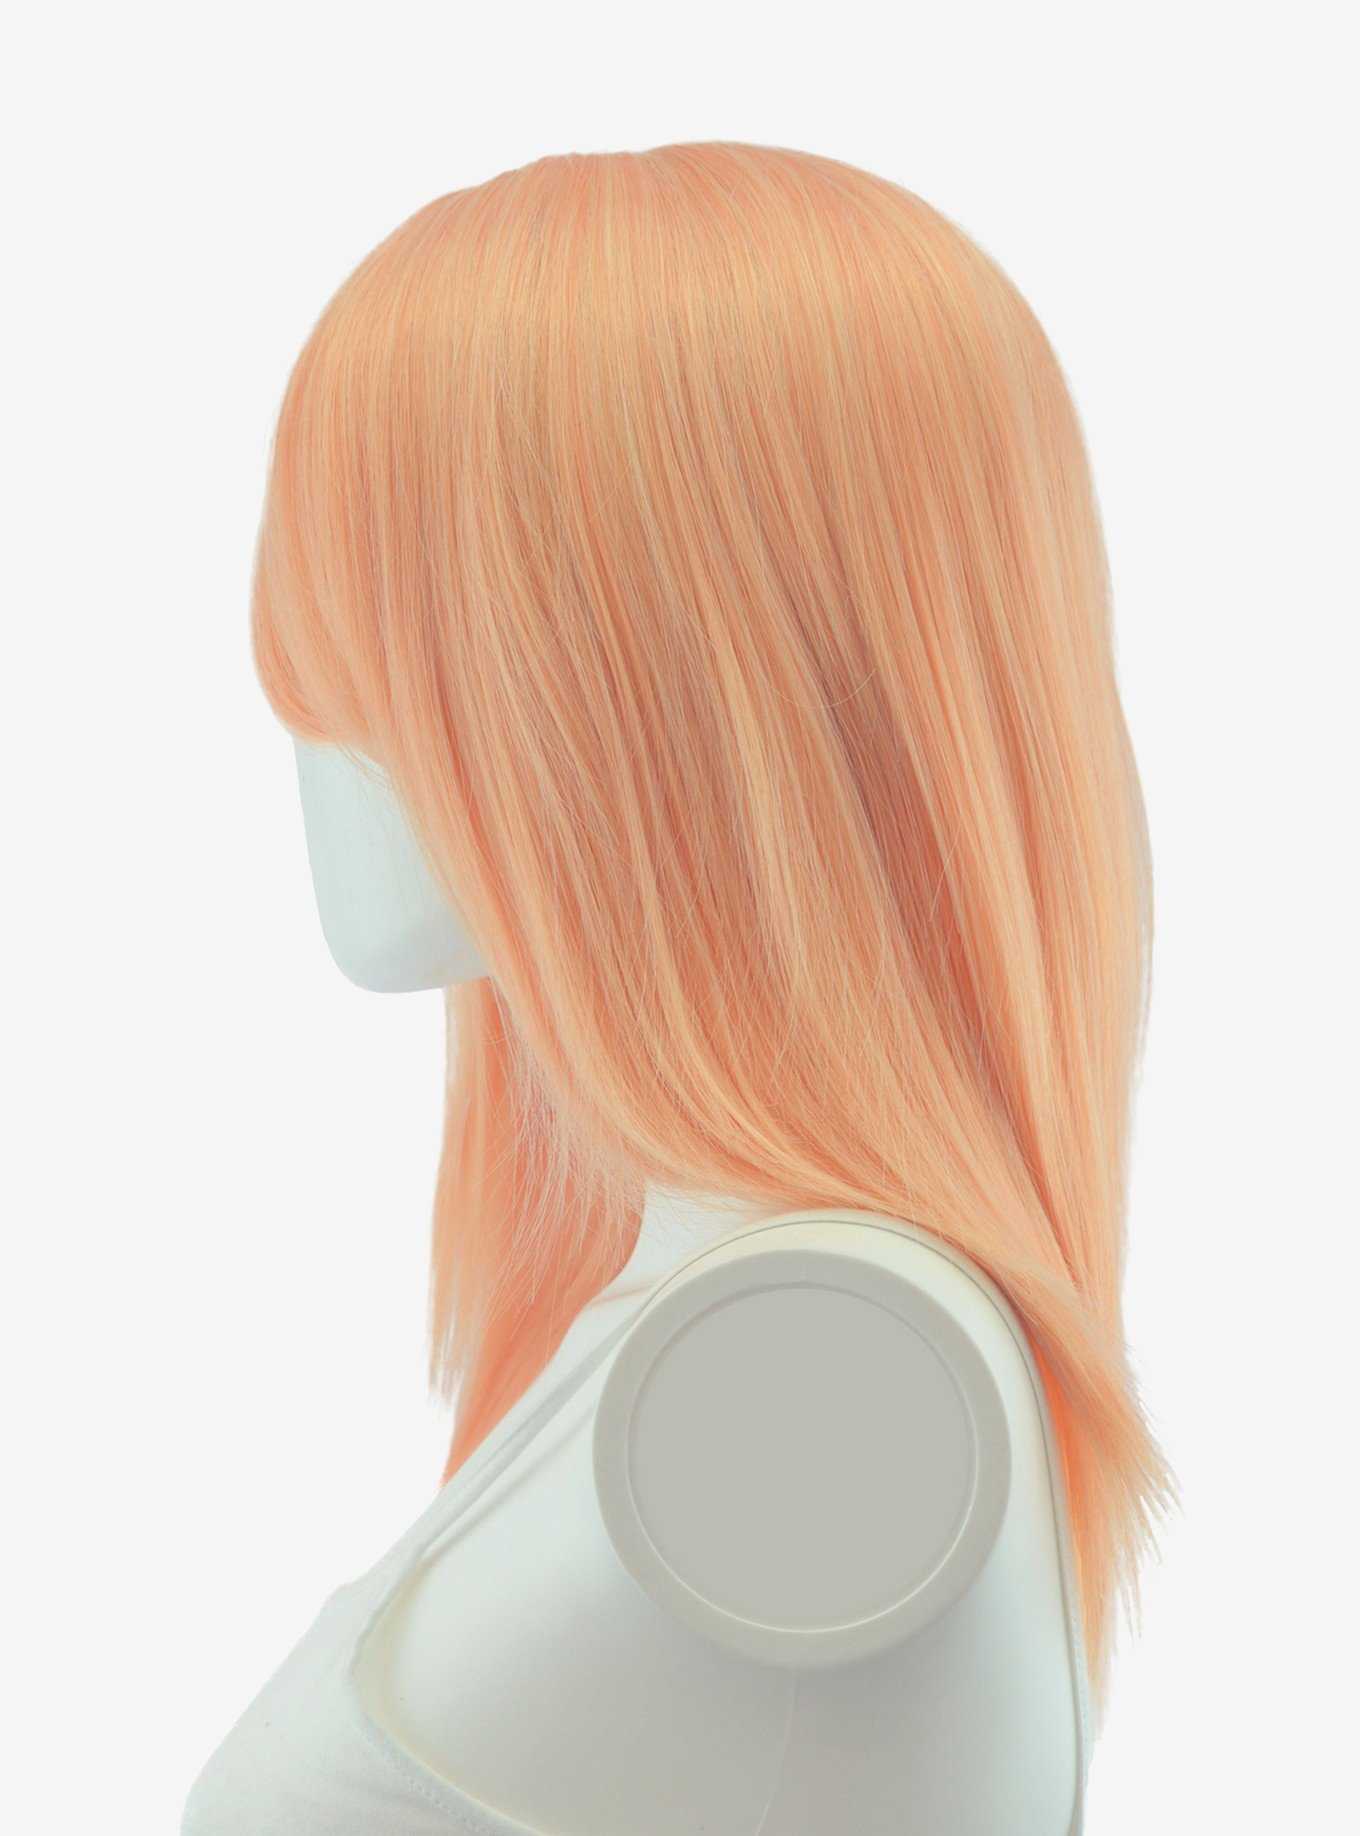 Epic Cosplay Theia Peach Blonde Medium Length Wig, , hi-res